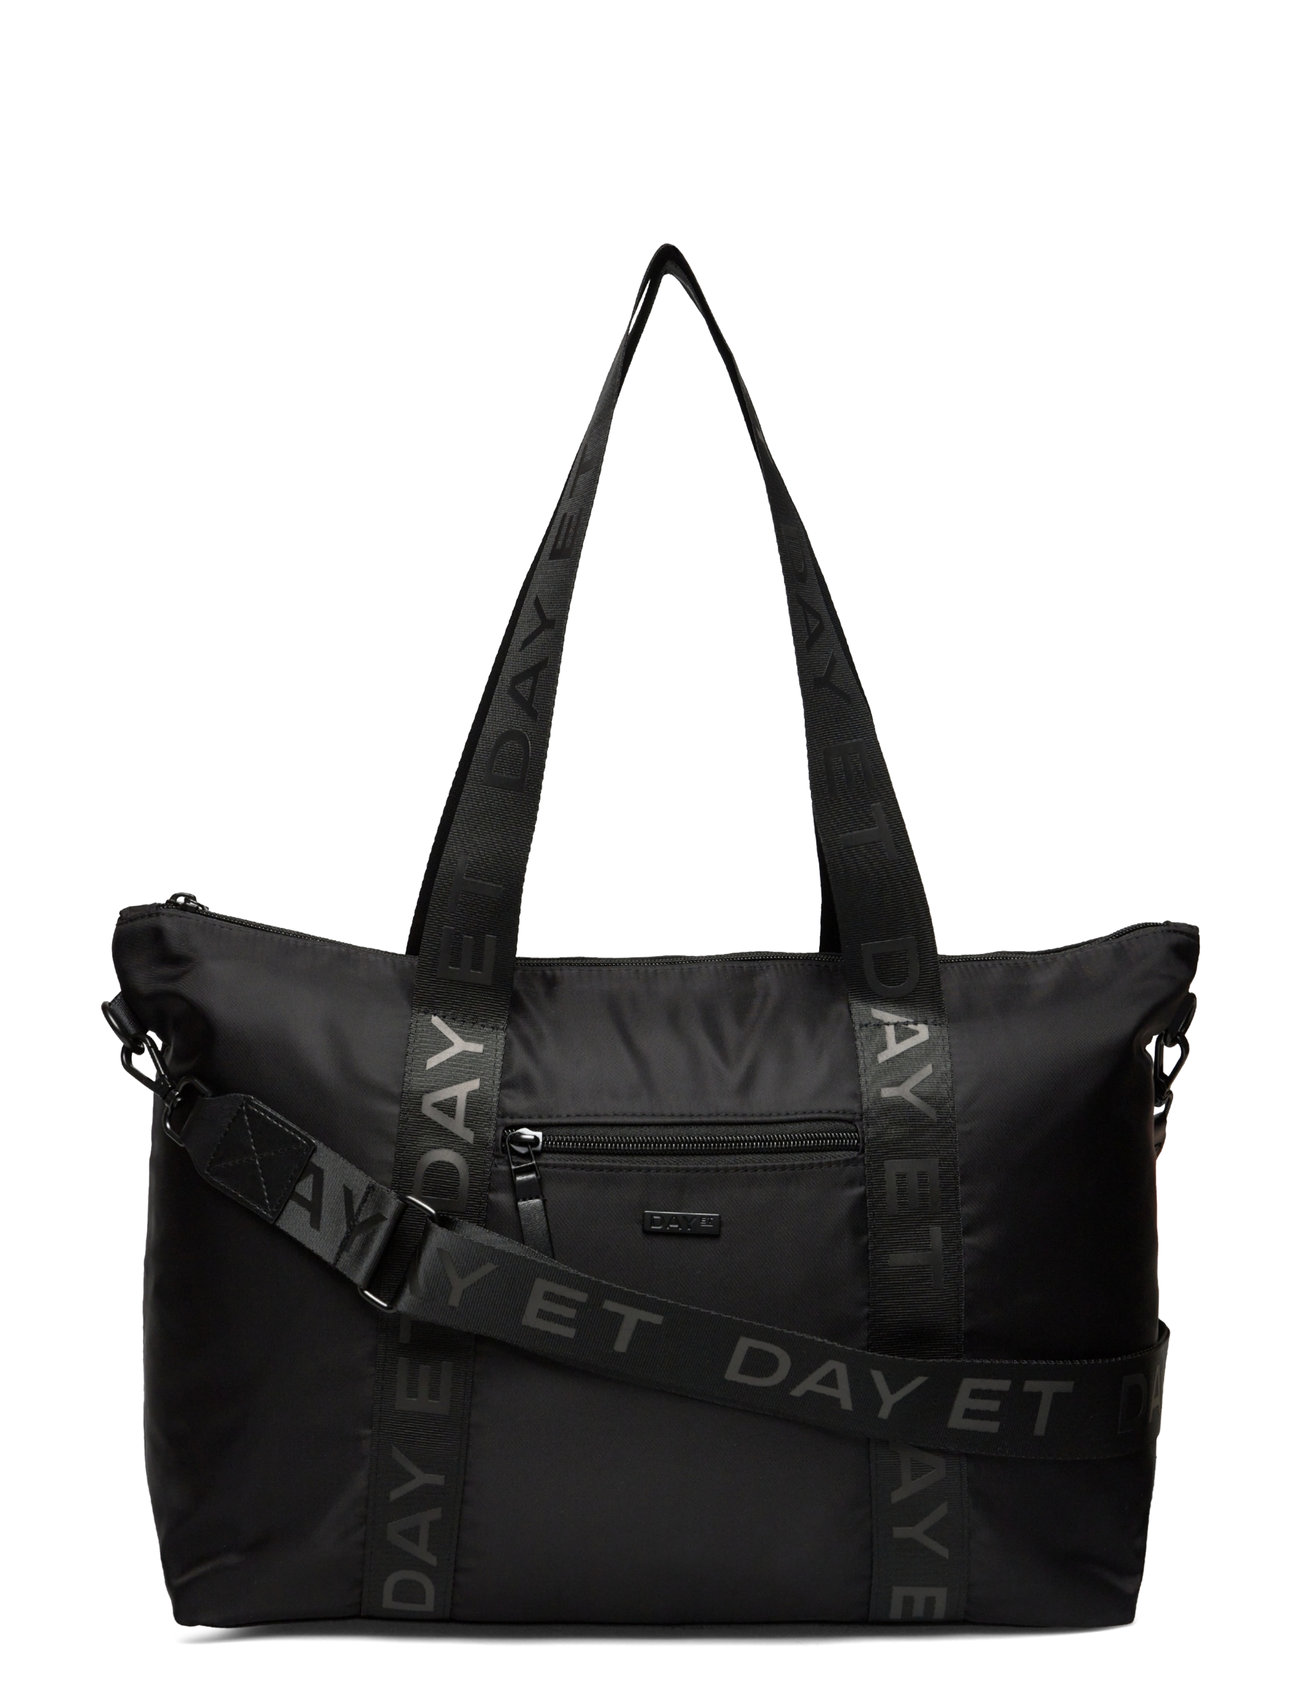 Day Re-Lb Tonal Cross Bag Bags Weekend & Gym Bags Black DAY ET